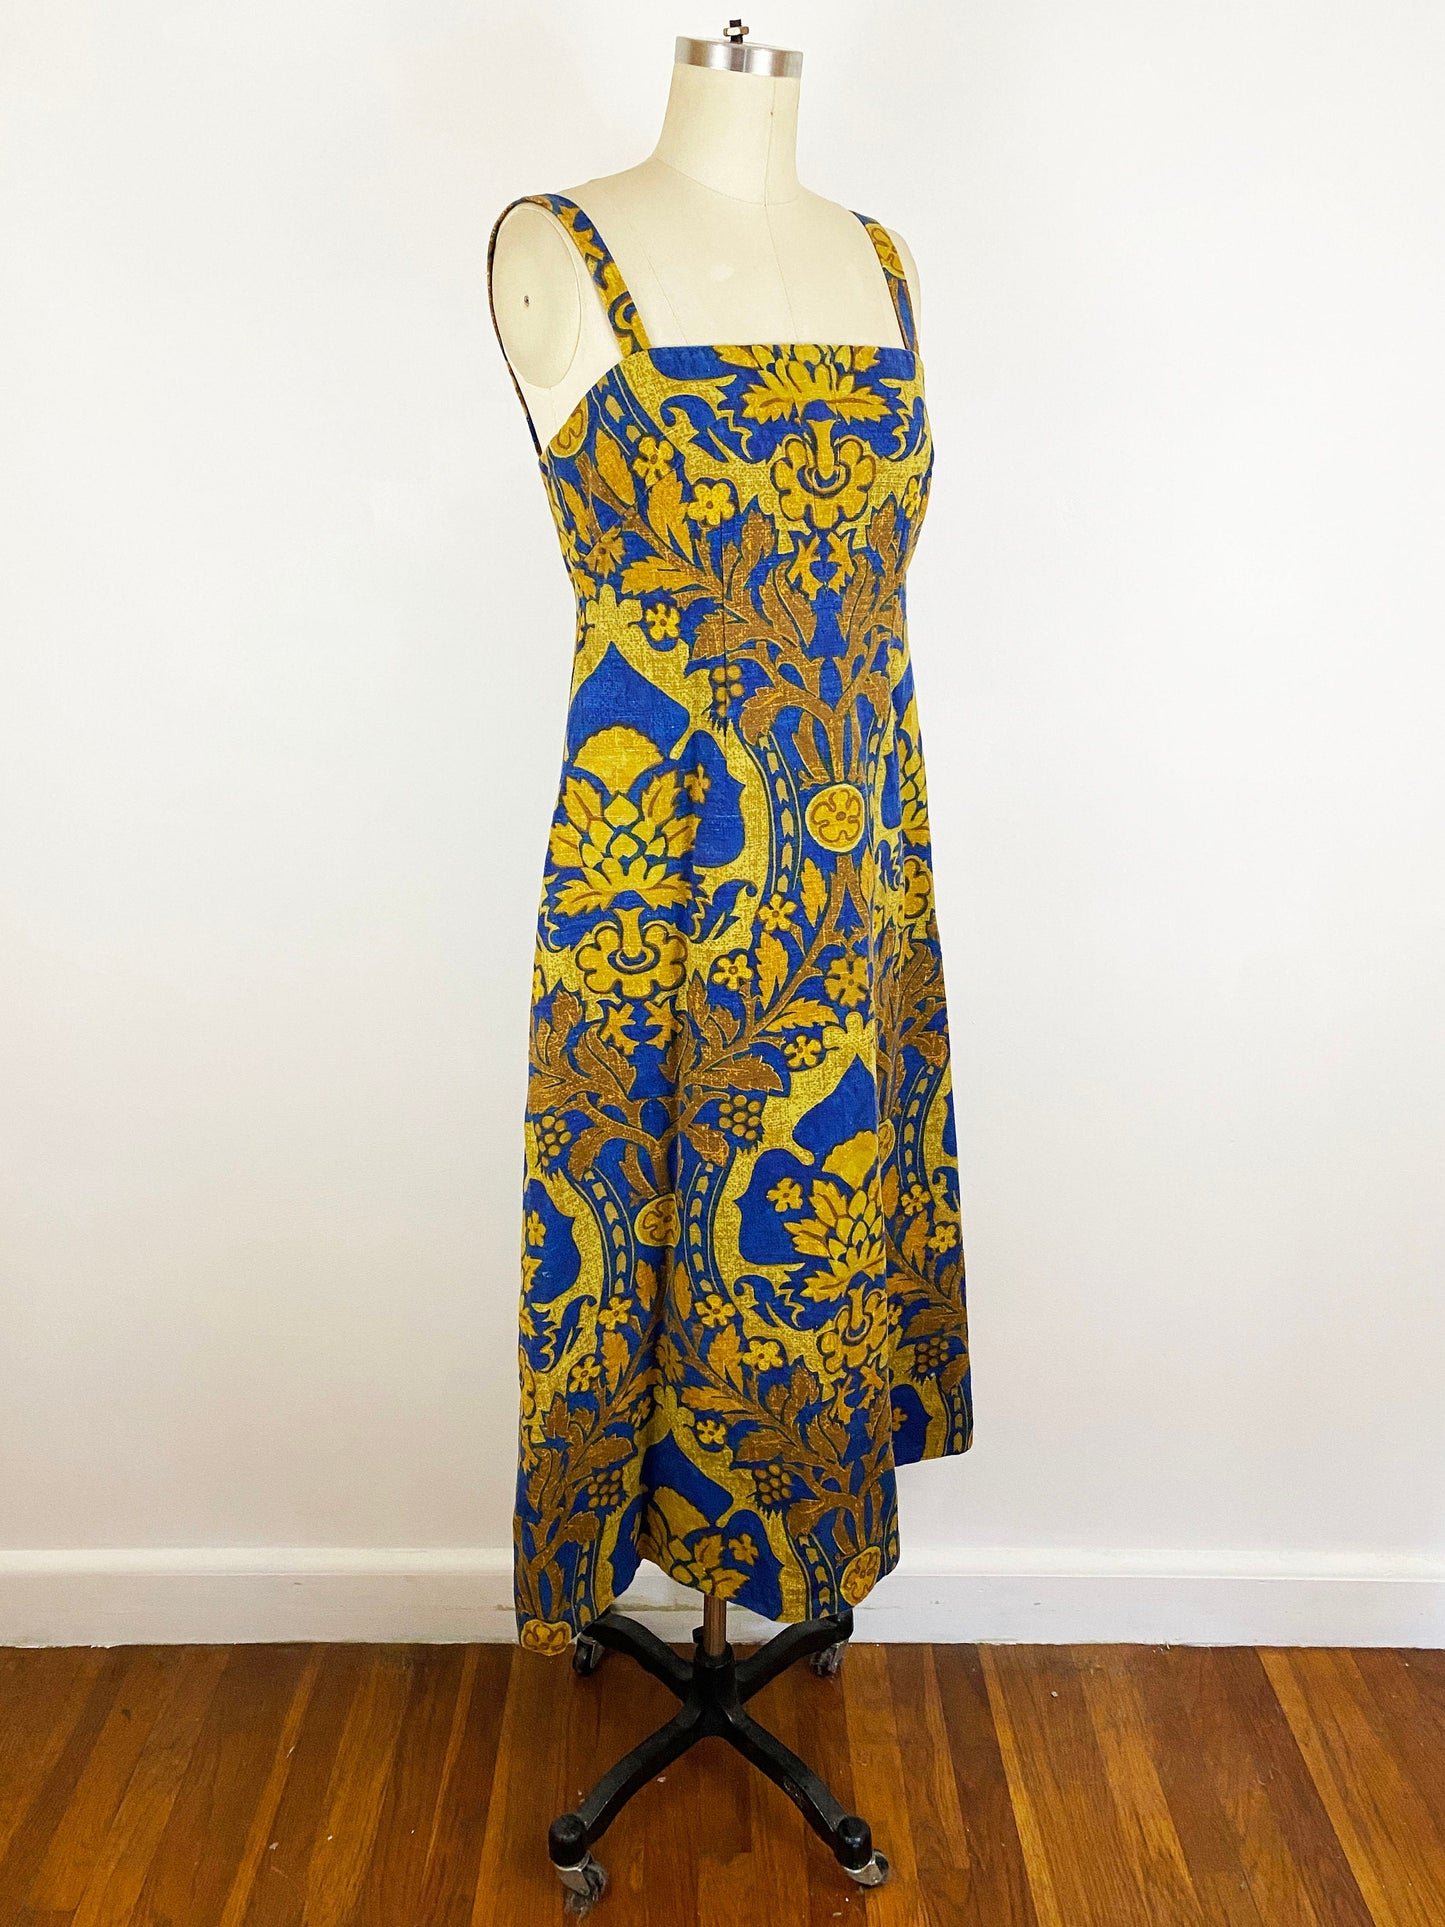 1960s Blue and Gold Art Nouveau Scroll Damask Symmetrical Cotton Maxi Dress A-line Romantic Fantasy Boho / Junior Sophisticates / Size Small